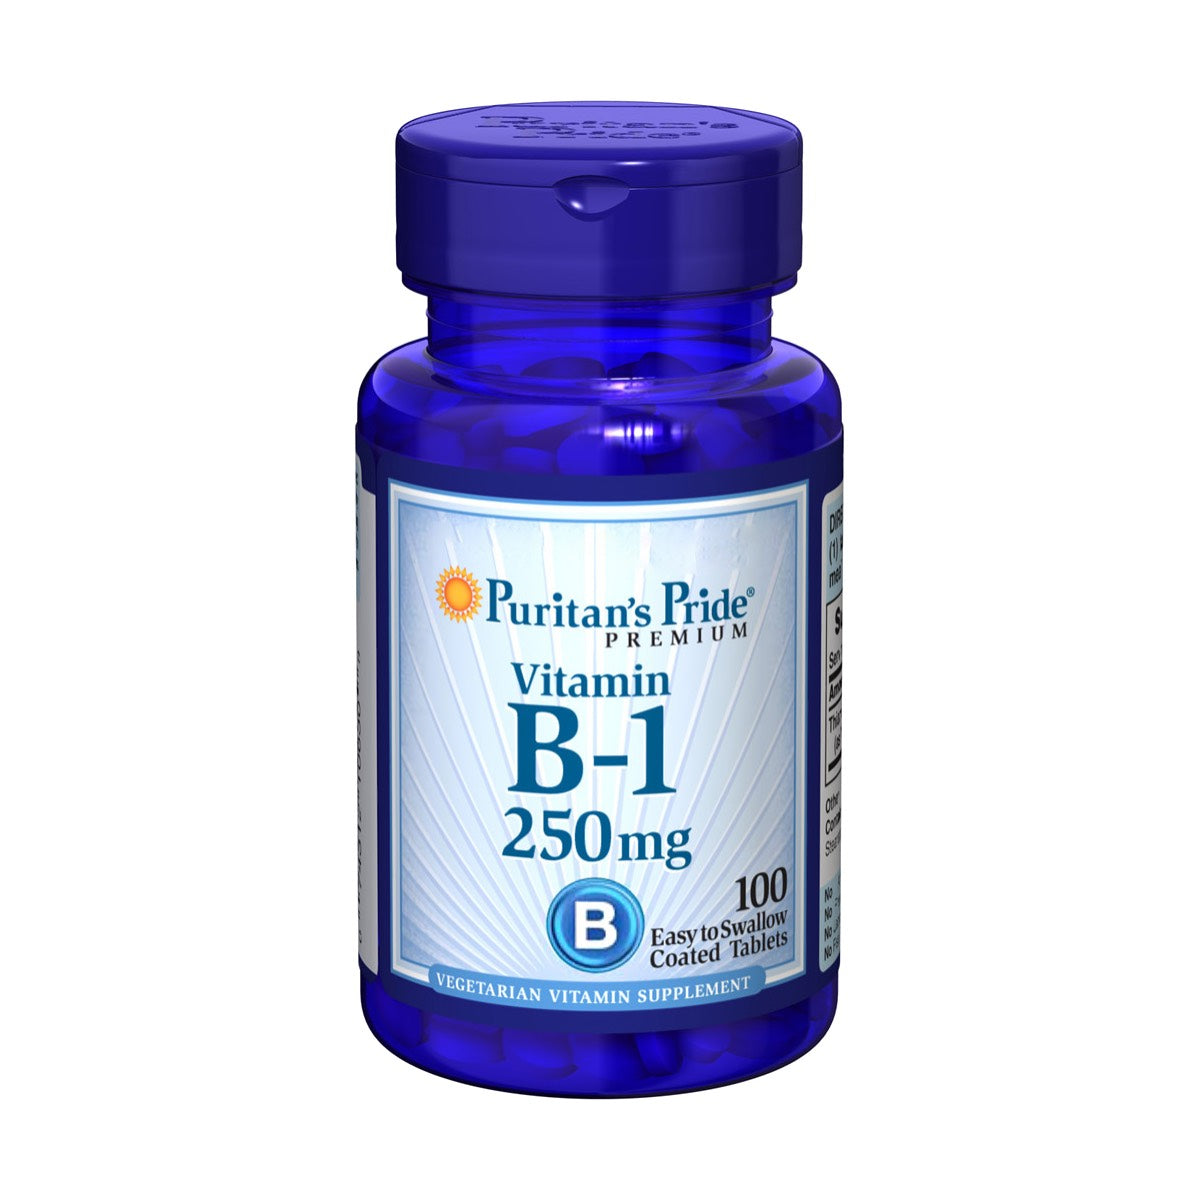 Puritan's Pride, Vitamin B-1 250 mg